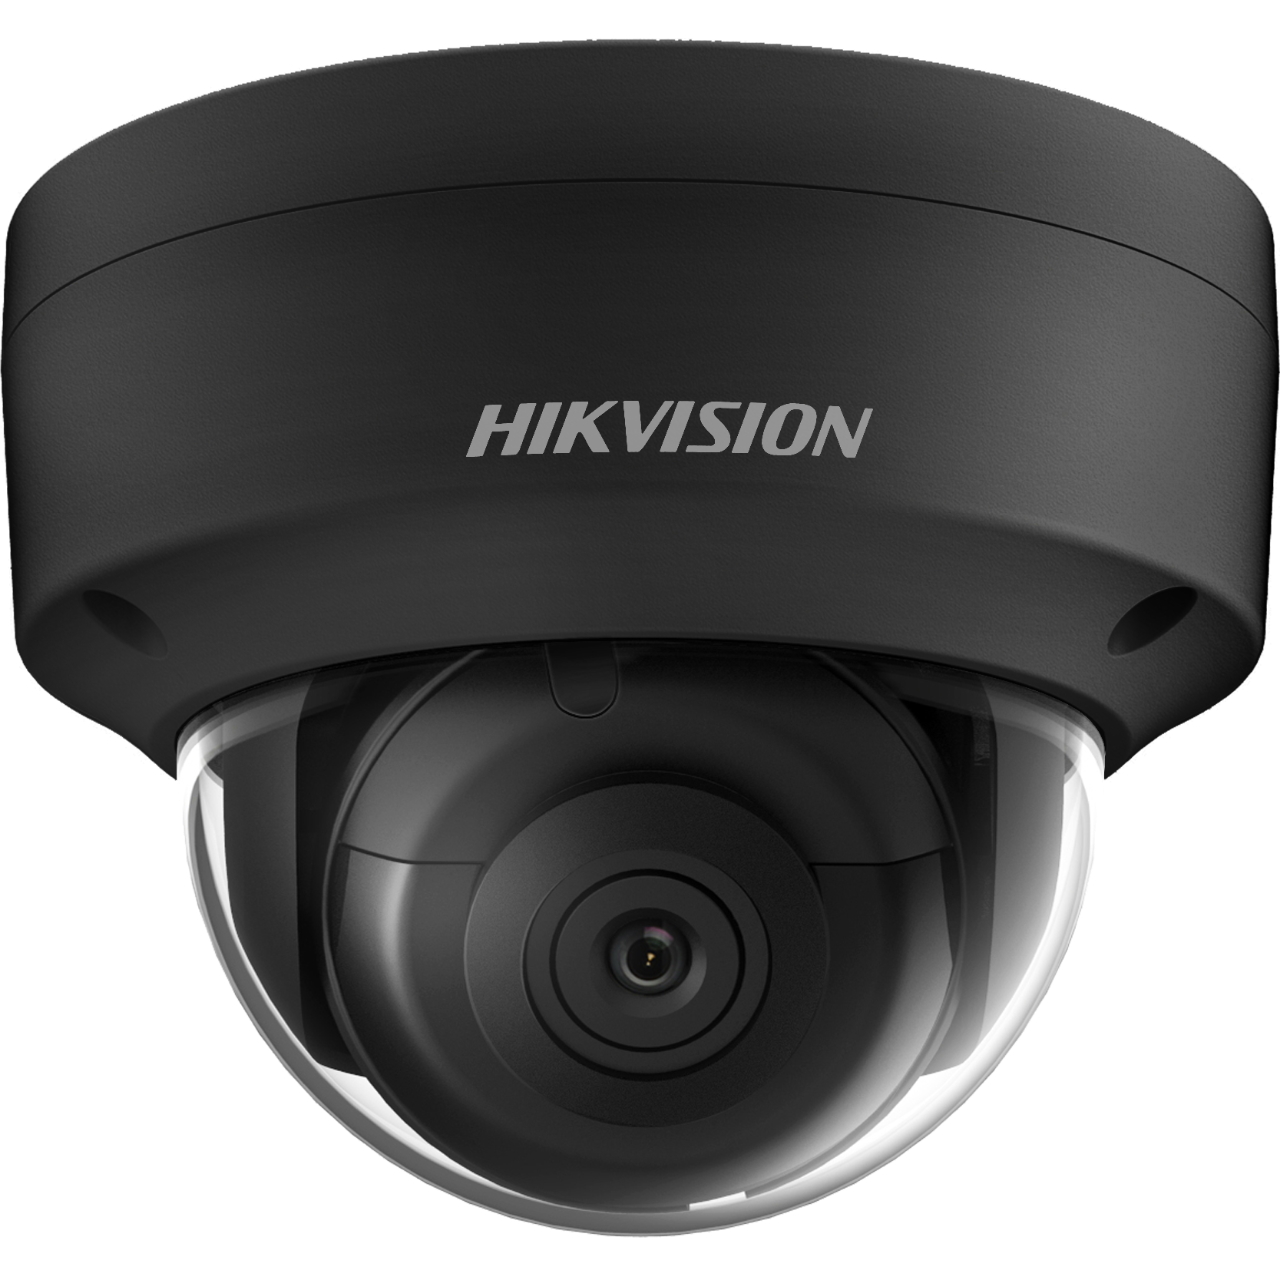 20000728 Hikvision Pro Series EasyIP 2.0+ Gen2 4MP WDR Mini IR Dome IP Camera, 2.8mm, zwart, audio